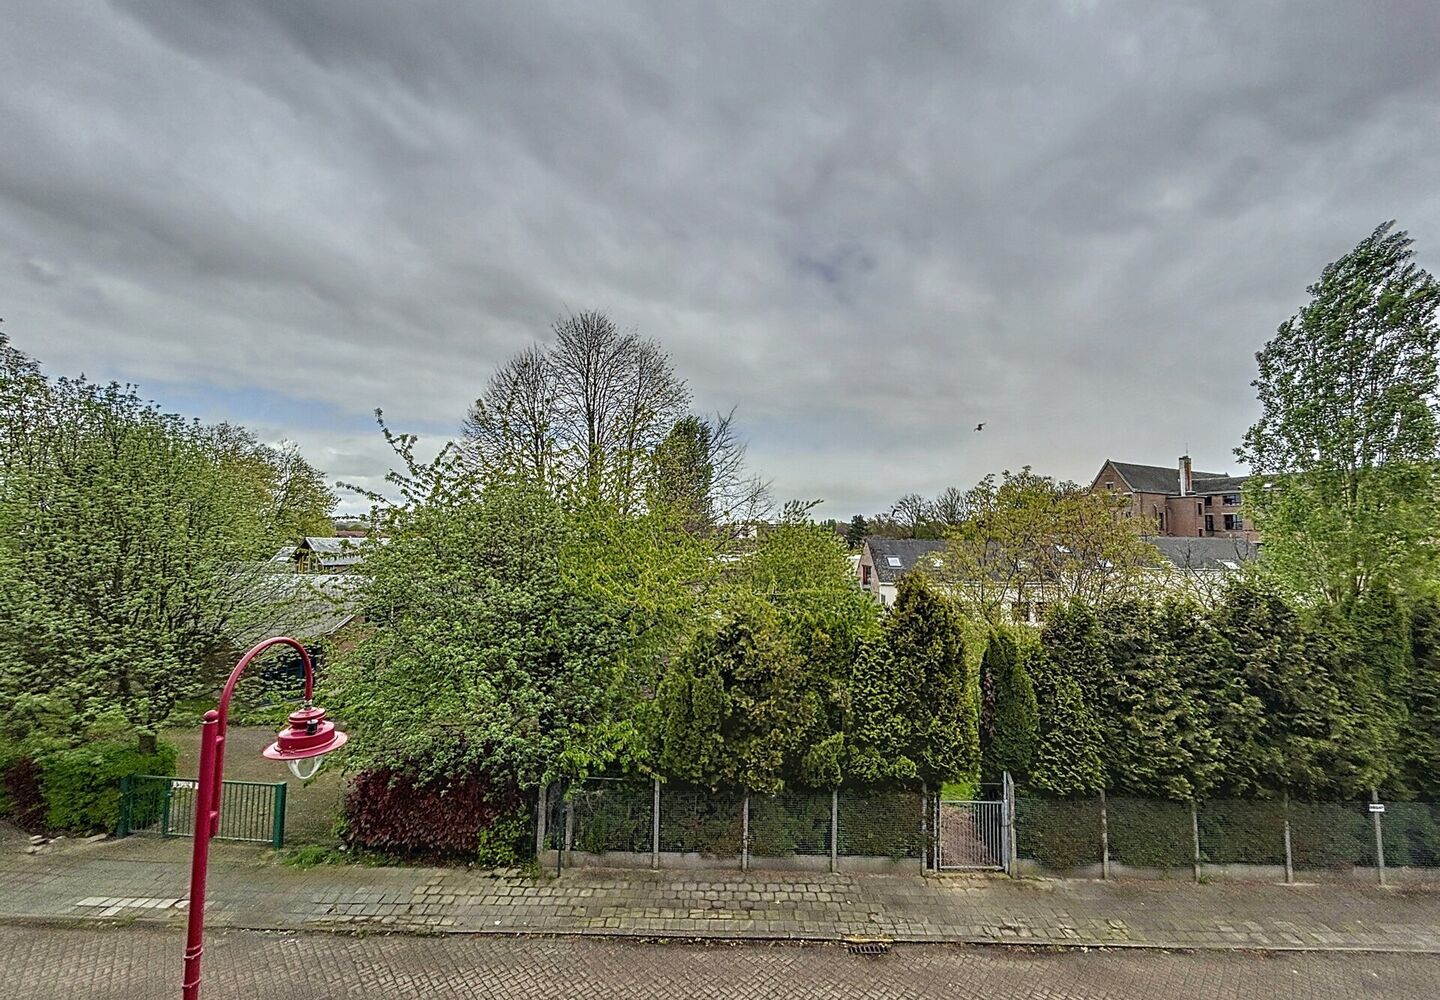 Flat for rent in Sint-Agata-Berchem